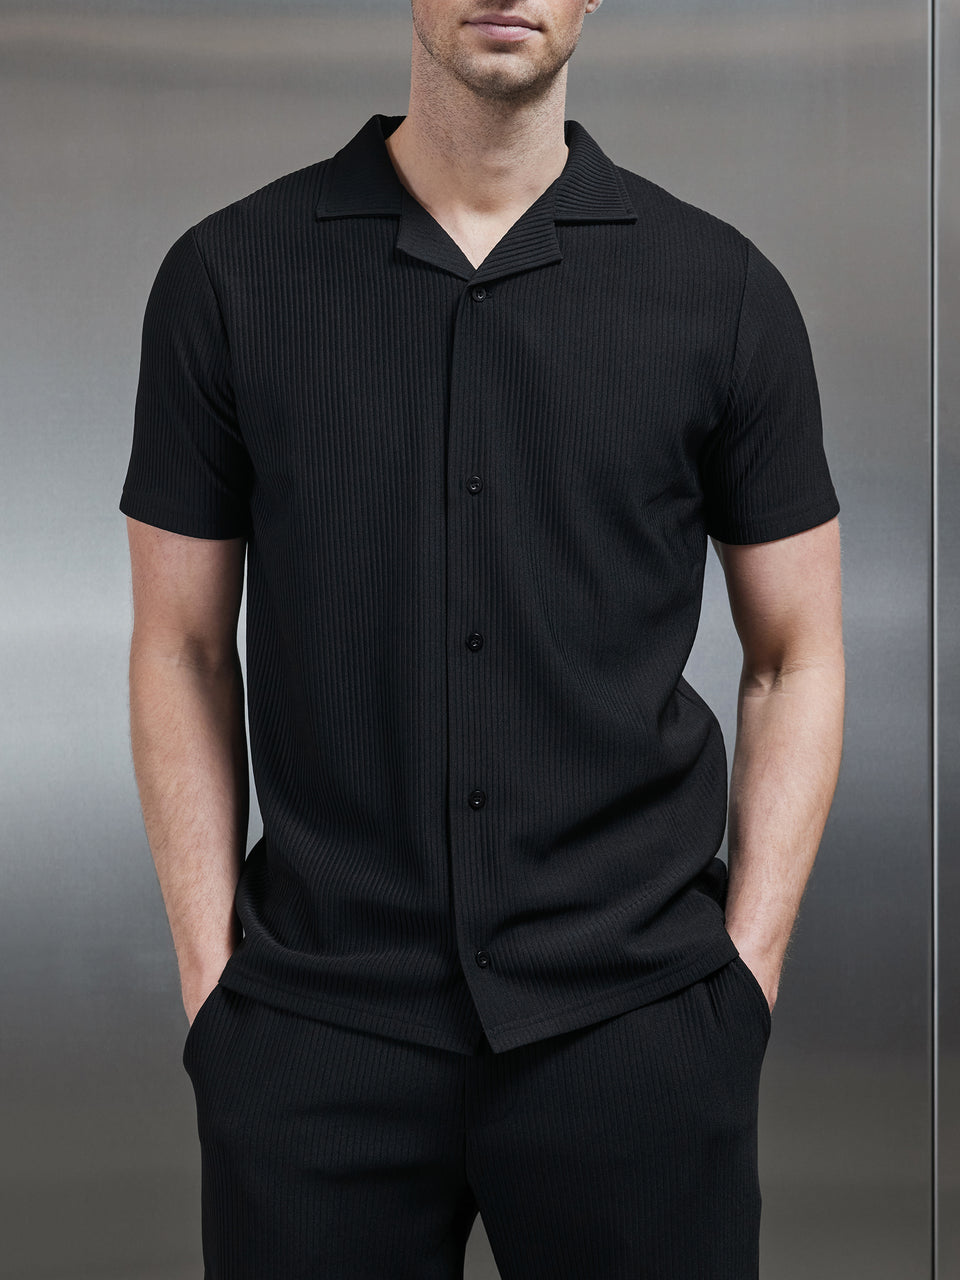 Pleated Revere Collar Shirt in Black